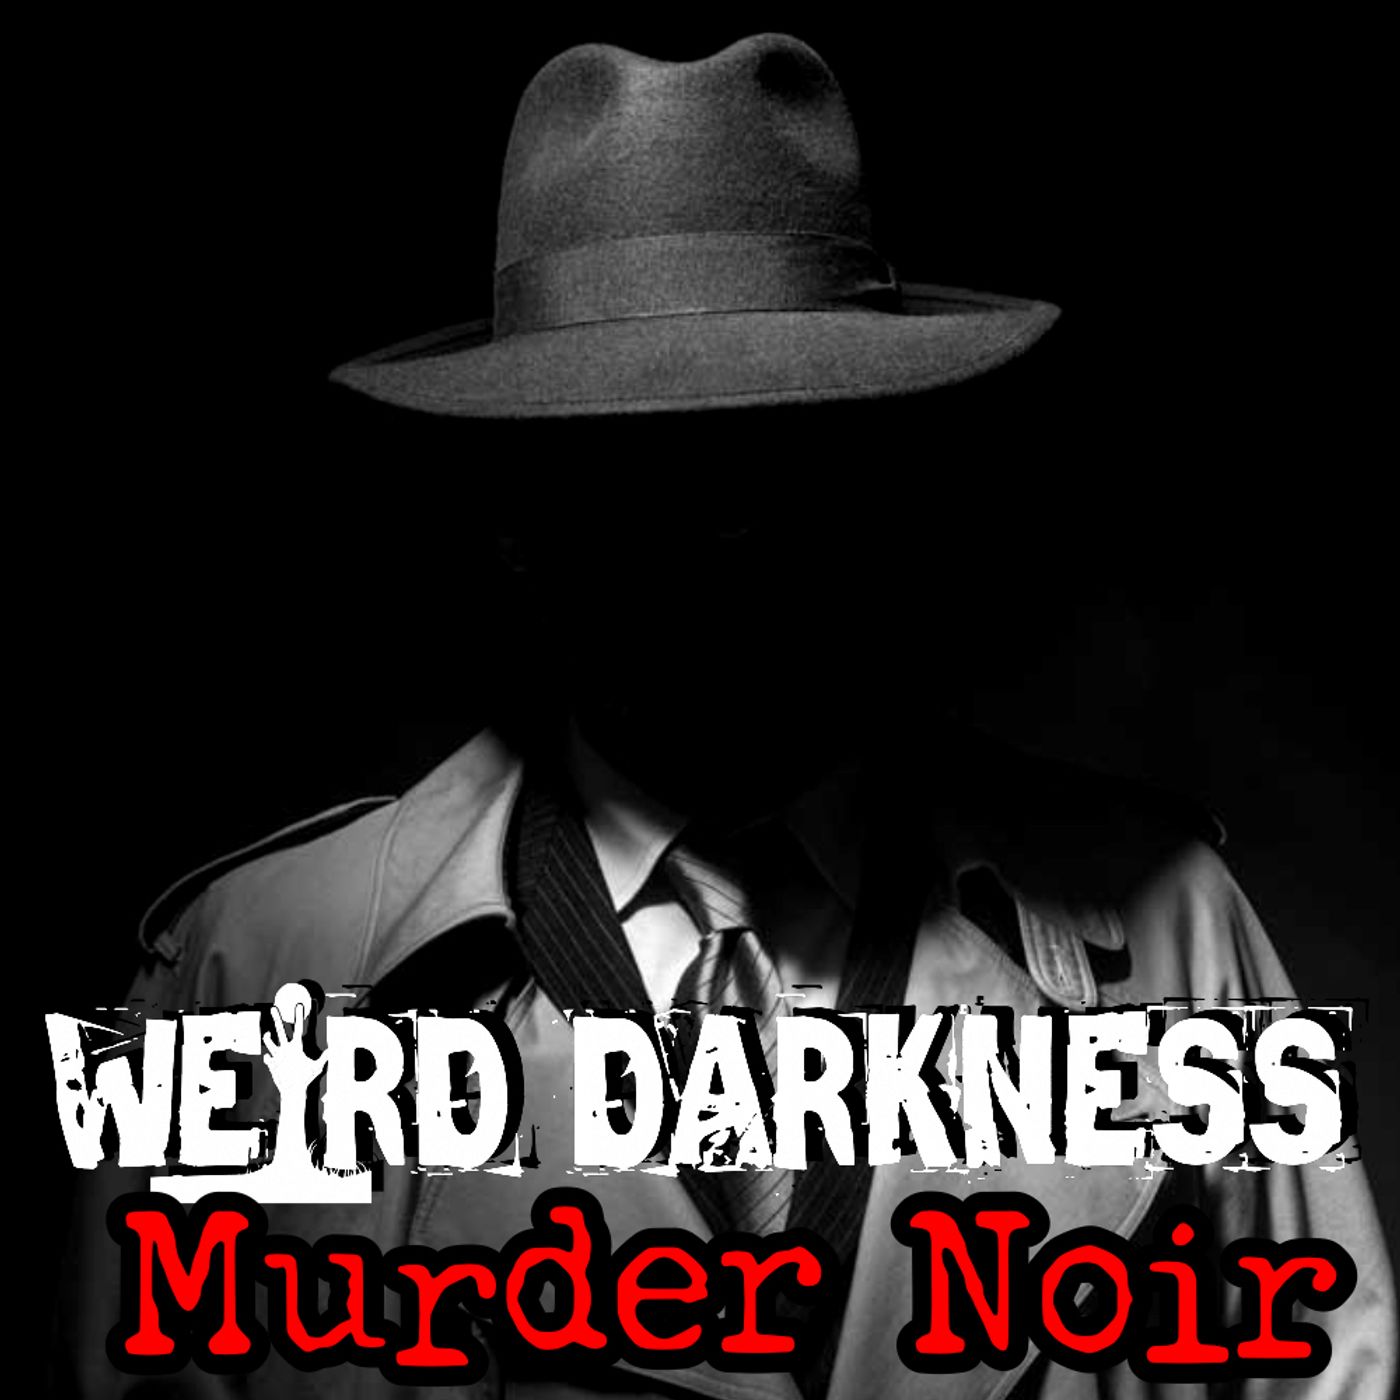 “The Unidentified Dandy Dressed Corpse Case” #MurderNoir